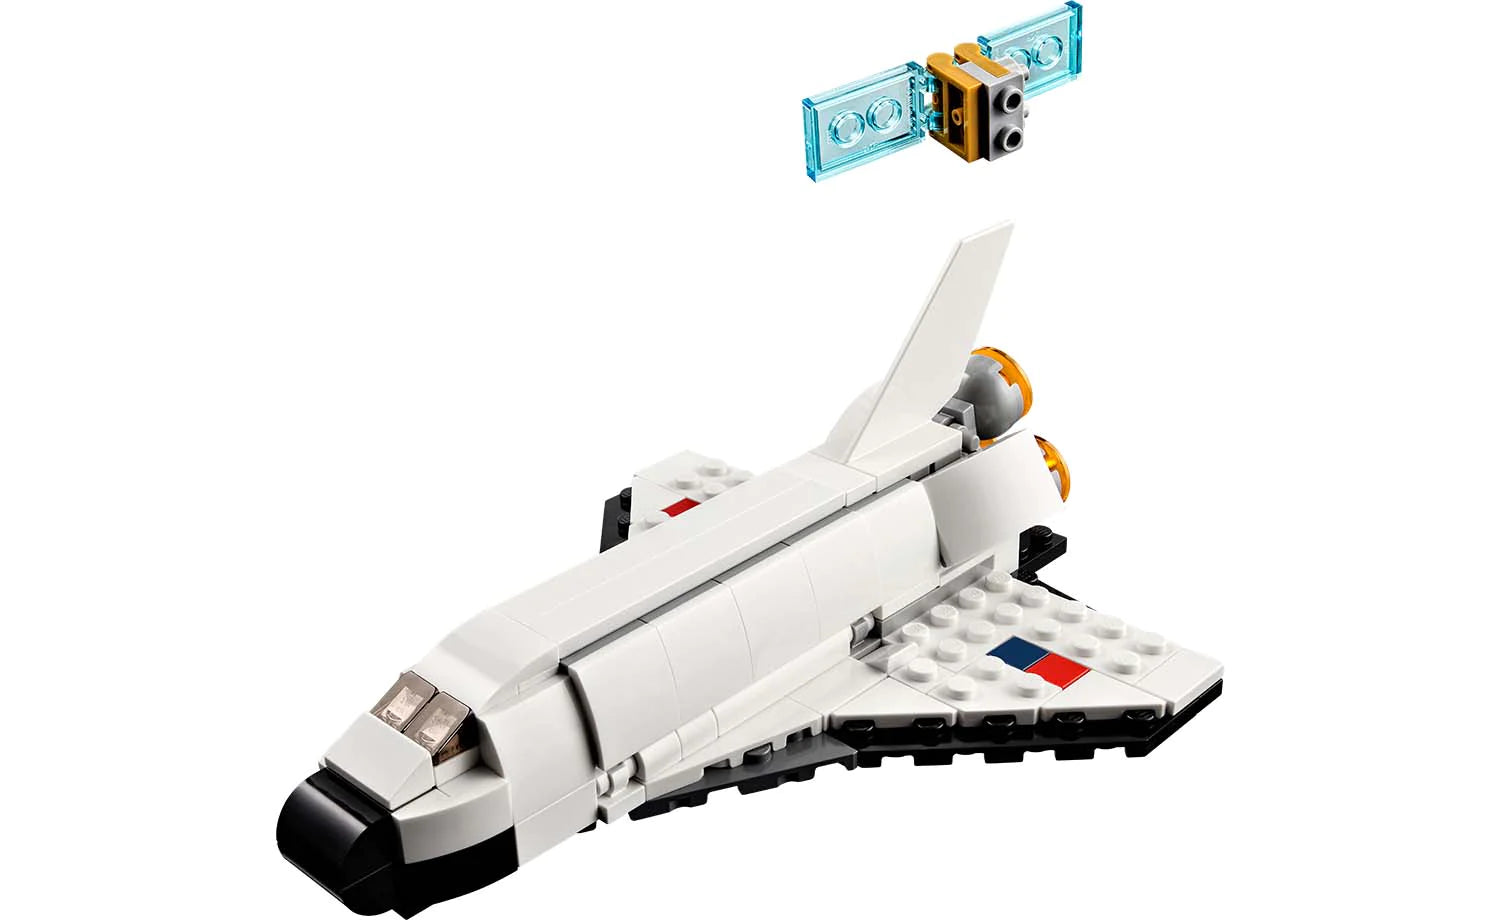 LEGO® Creator 3-in-1 Space Shuttle 31134